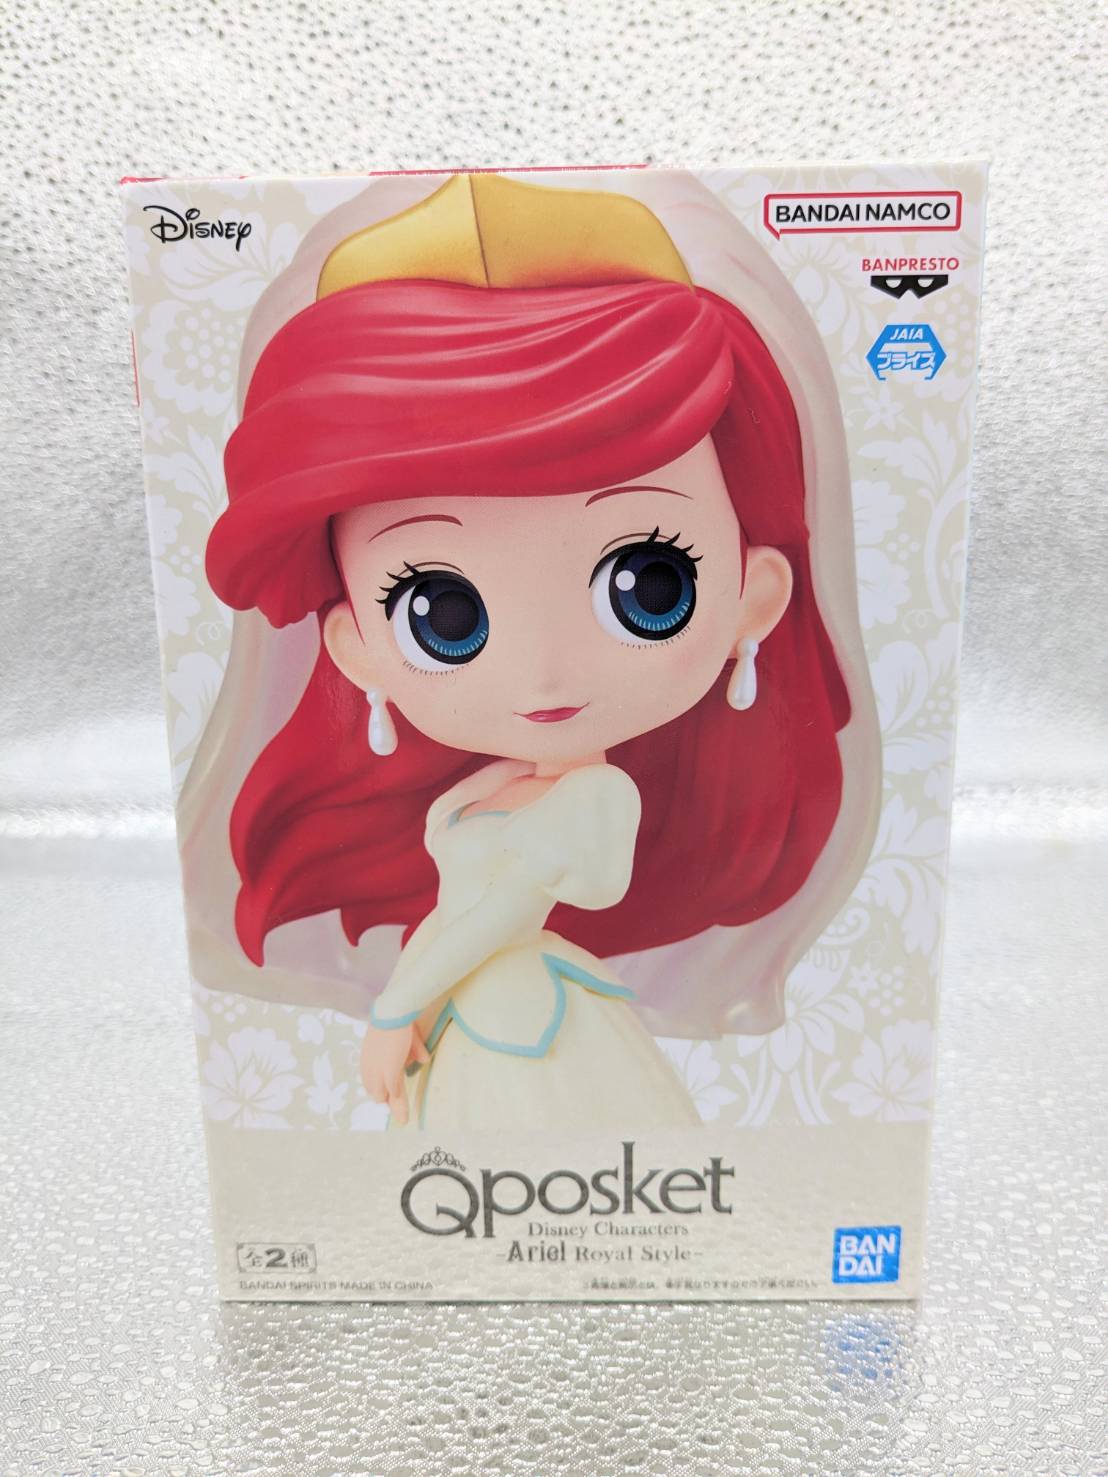 Qposket Disney Characters -Ariel Royal Style- Bカラー 2624168